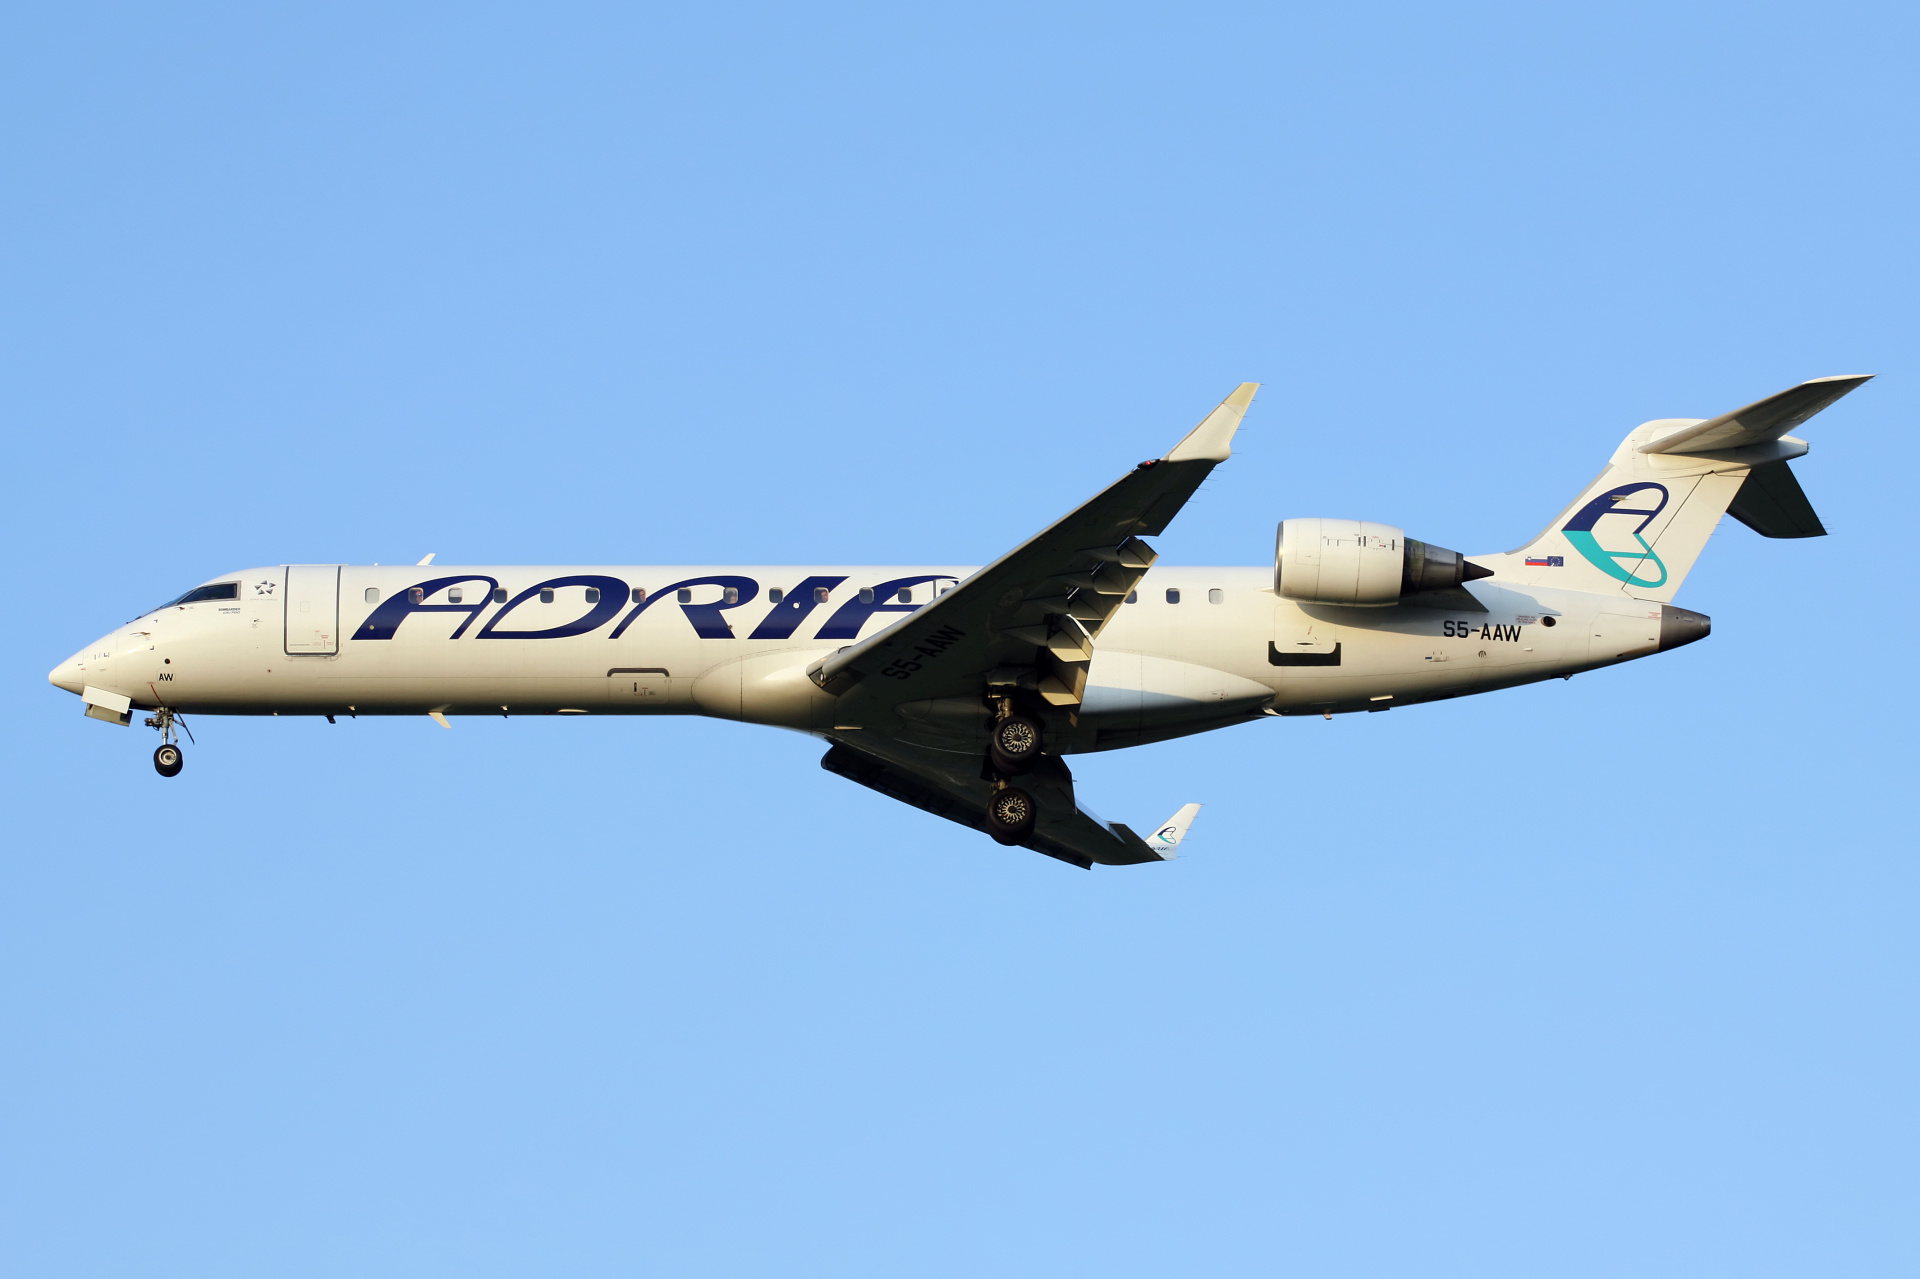 S5-AAW, Adria Airways (Aircraft » EPWA Spotting » Mitsubishi Regional Jet » CRJ-700)